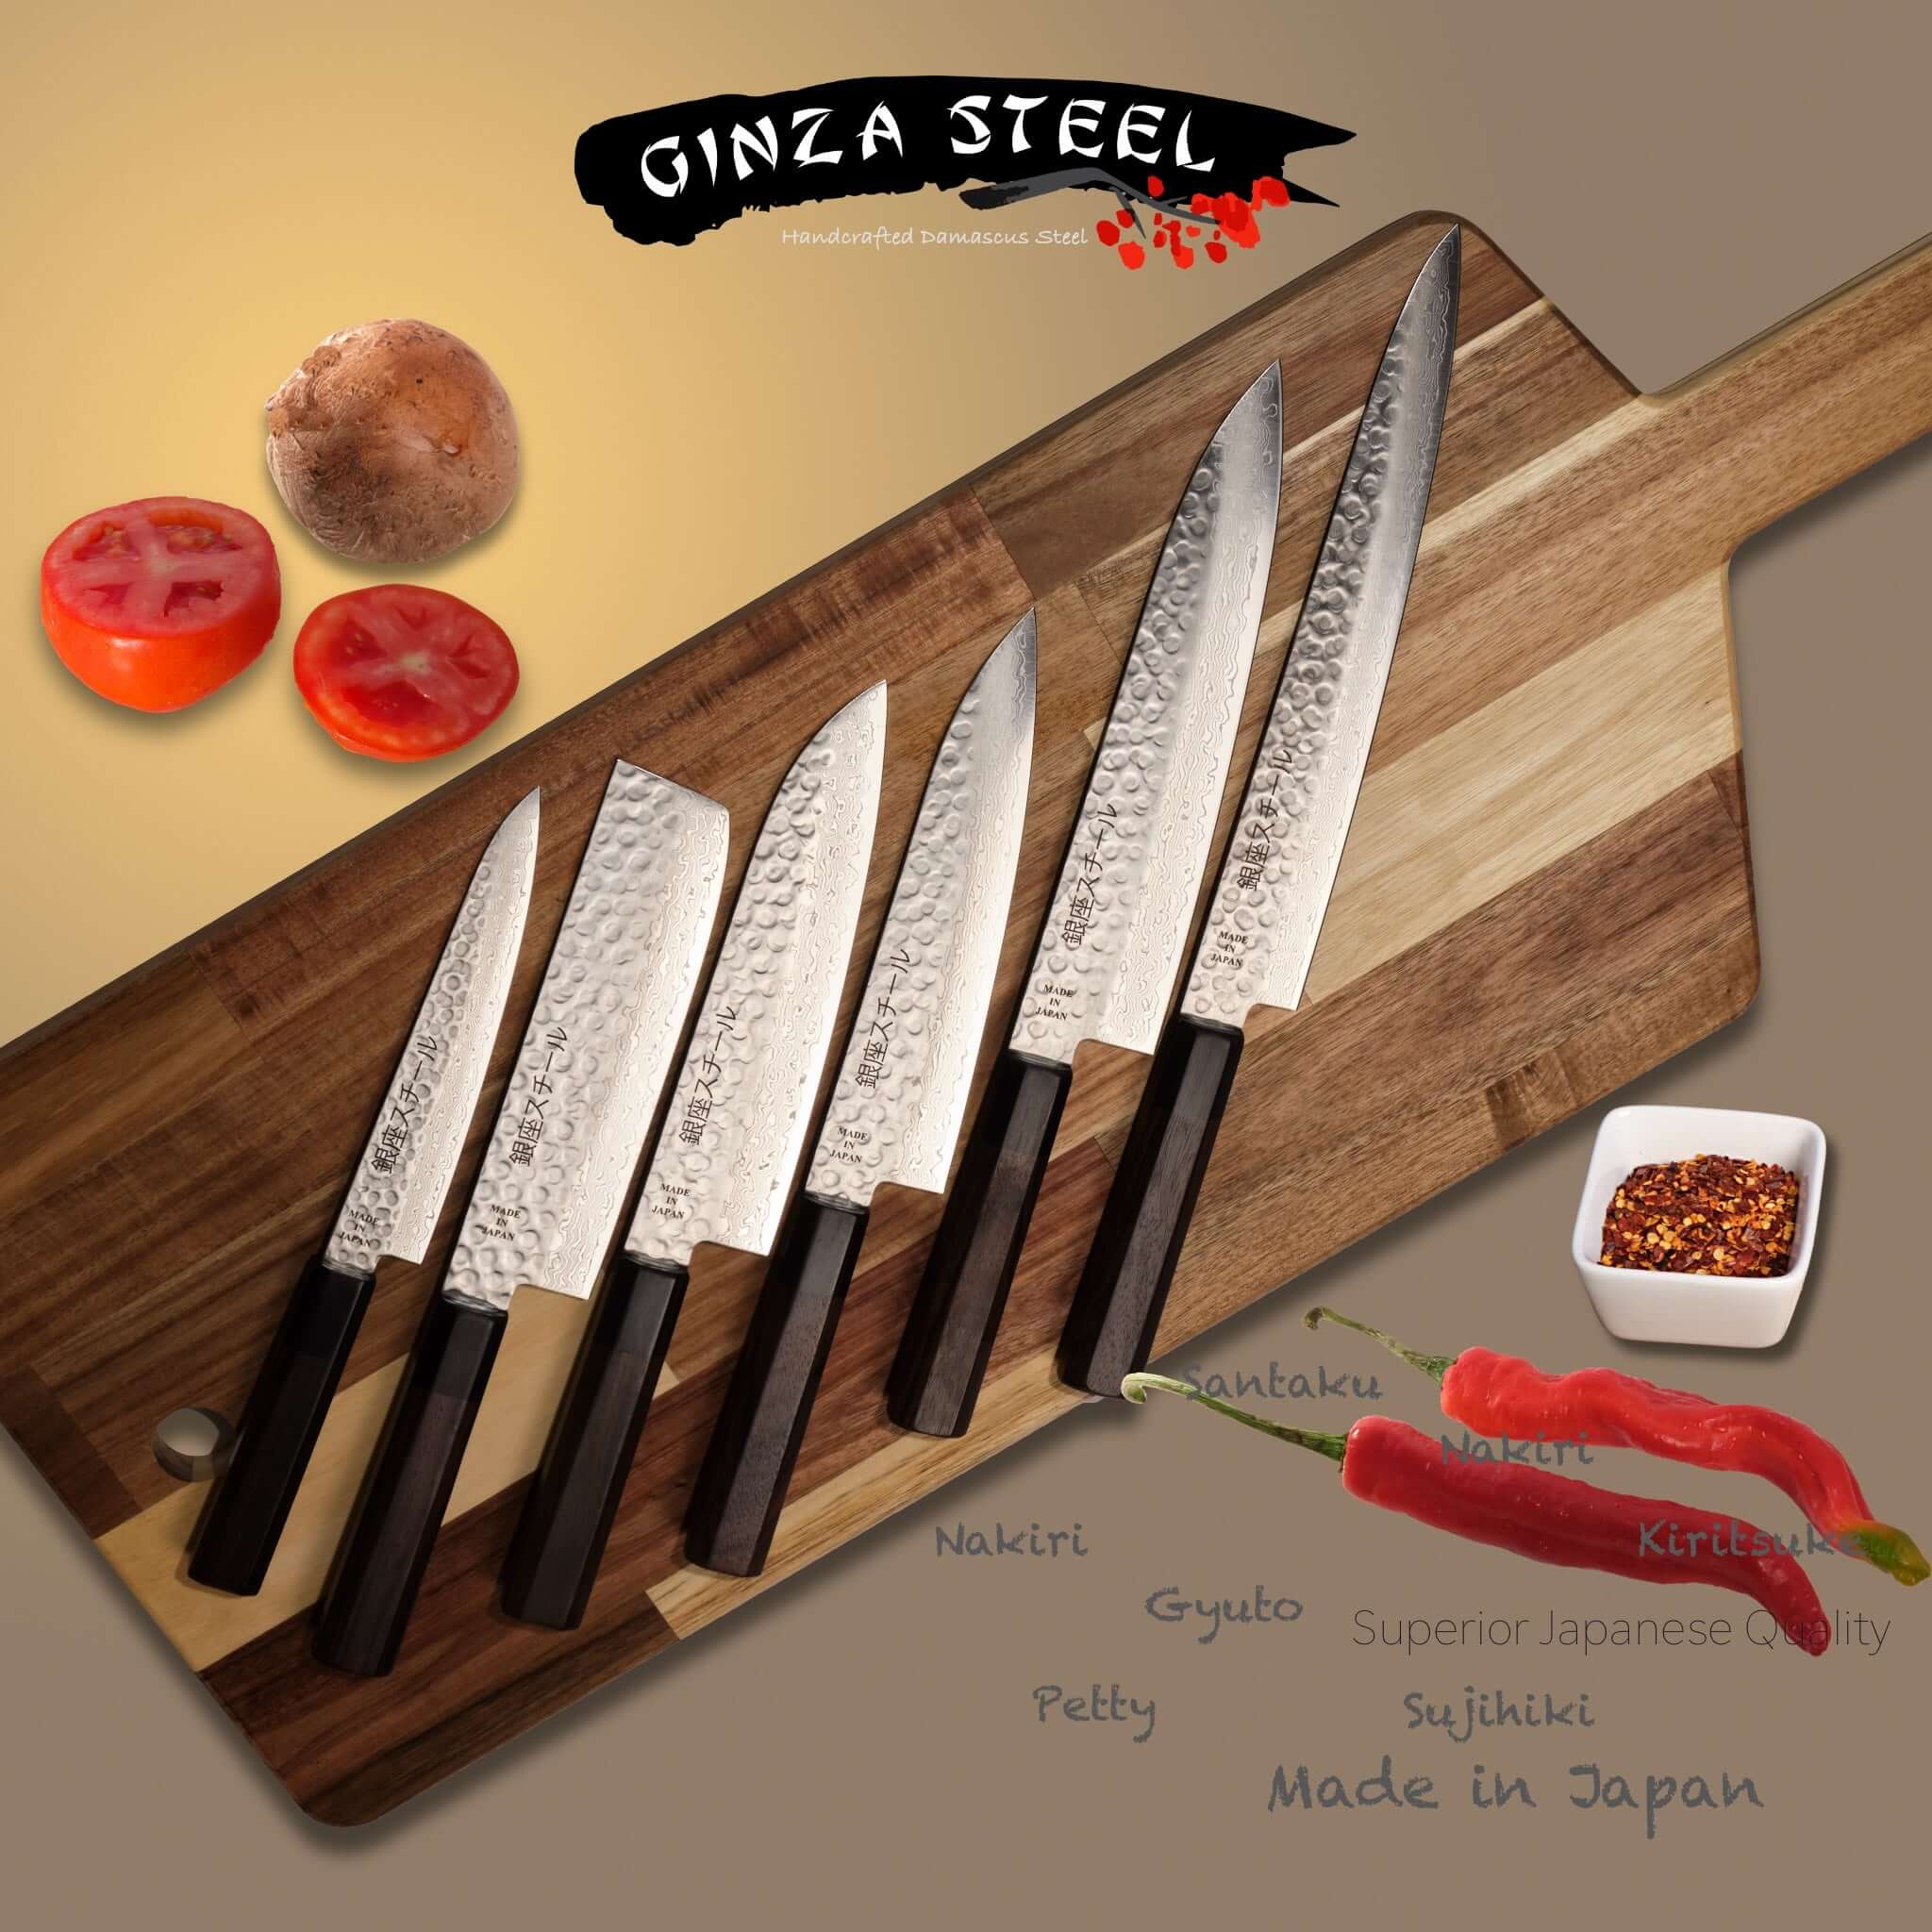 Handcrafted - Ginza Steel Yuma Damascus Steel Skinner knife 5 inch blade